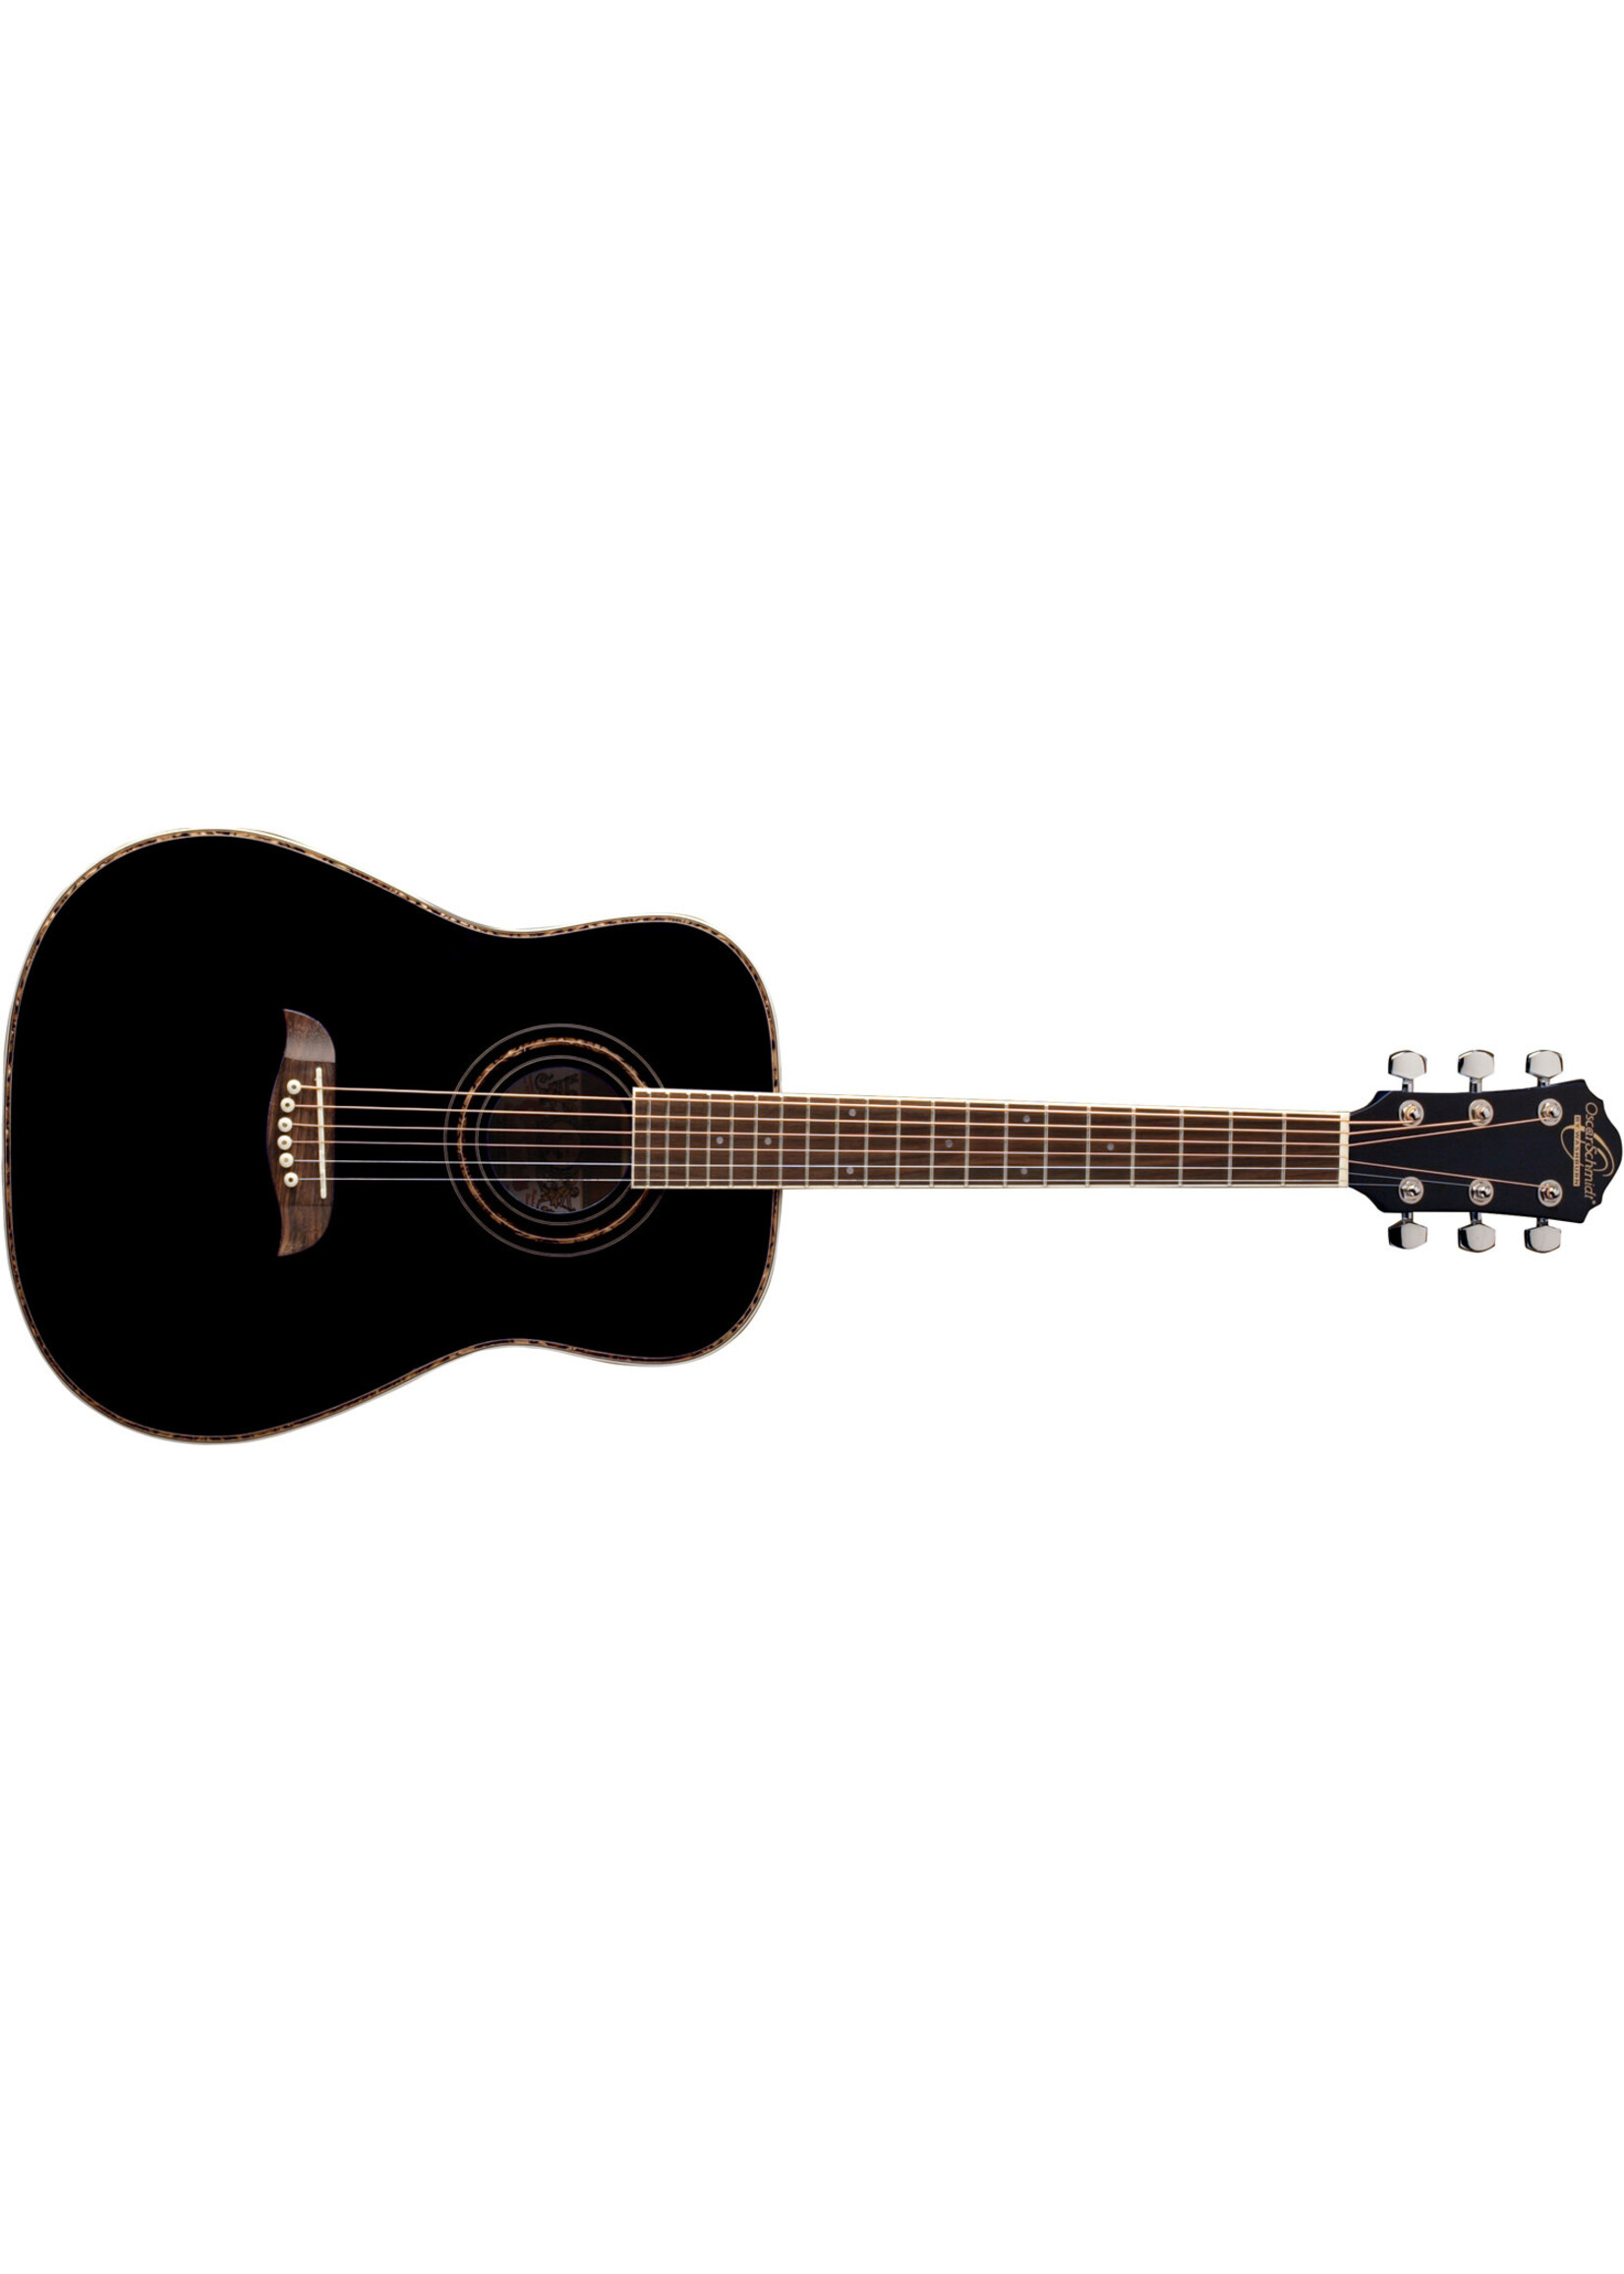 Oscar Schmidt Oscar Schmidt OGHSB-A-U 1/2 Size Dreadnought Acoustic Guitar, Black